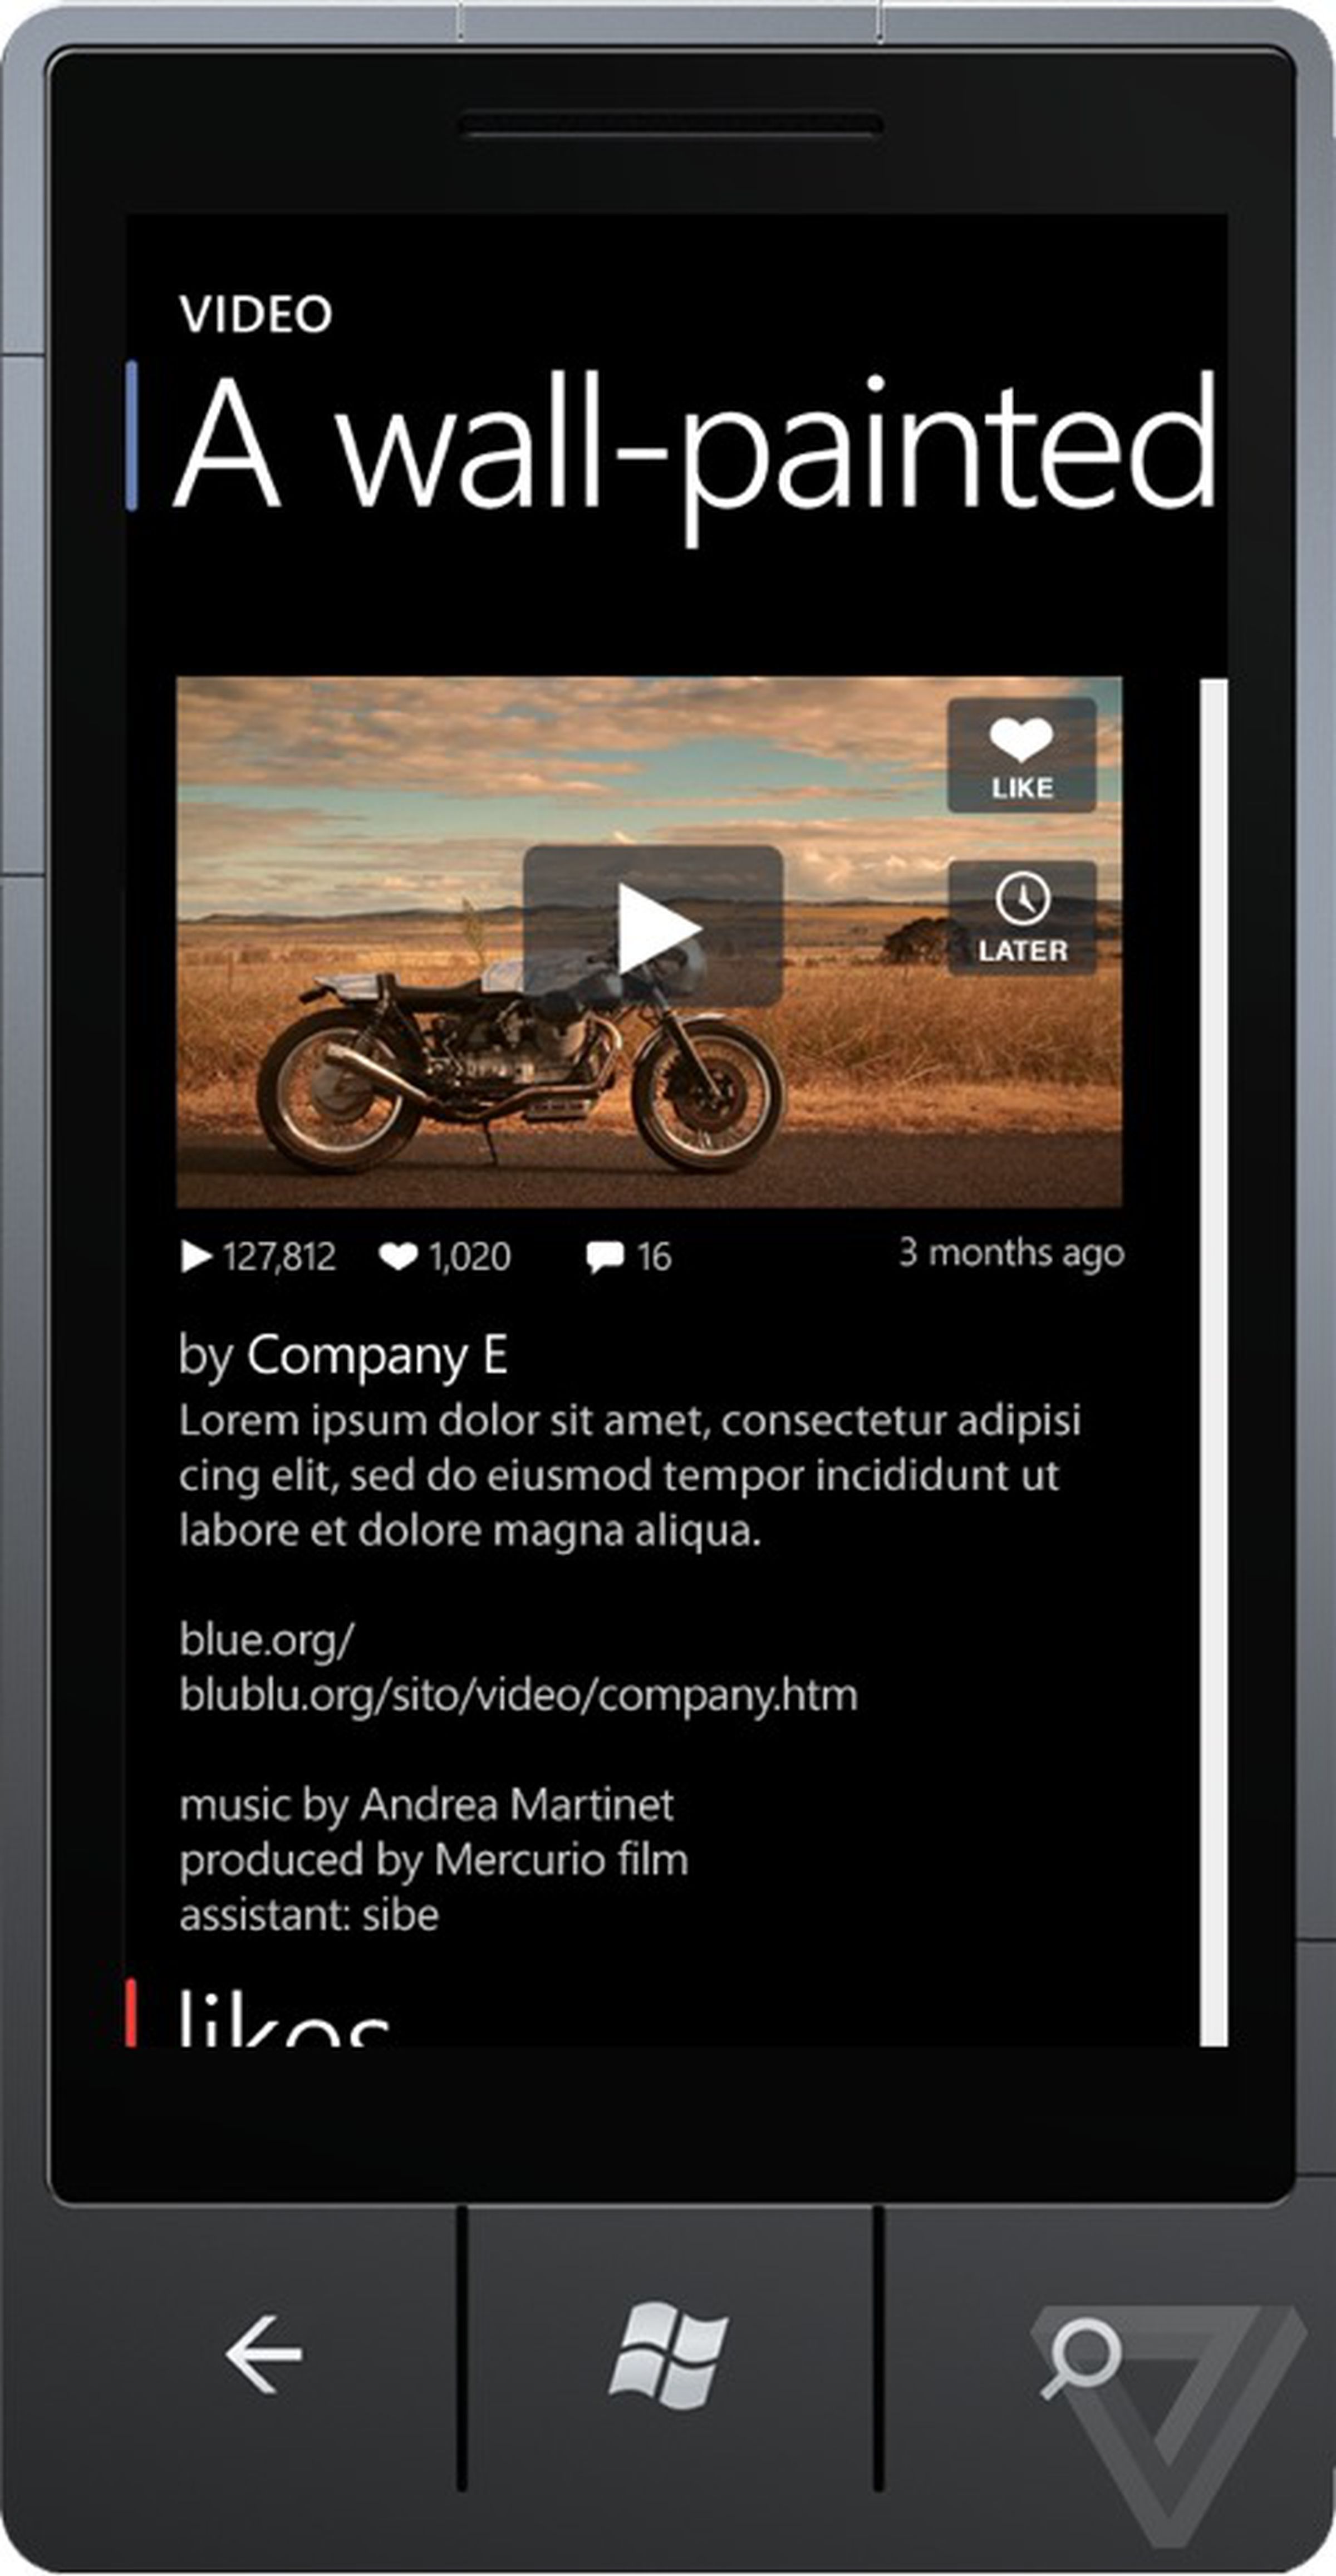 Vimeo for Android, iPad, Windows Phone photos